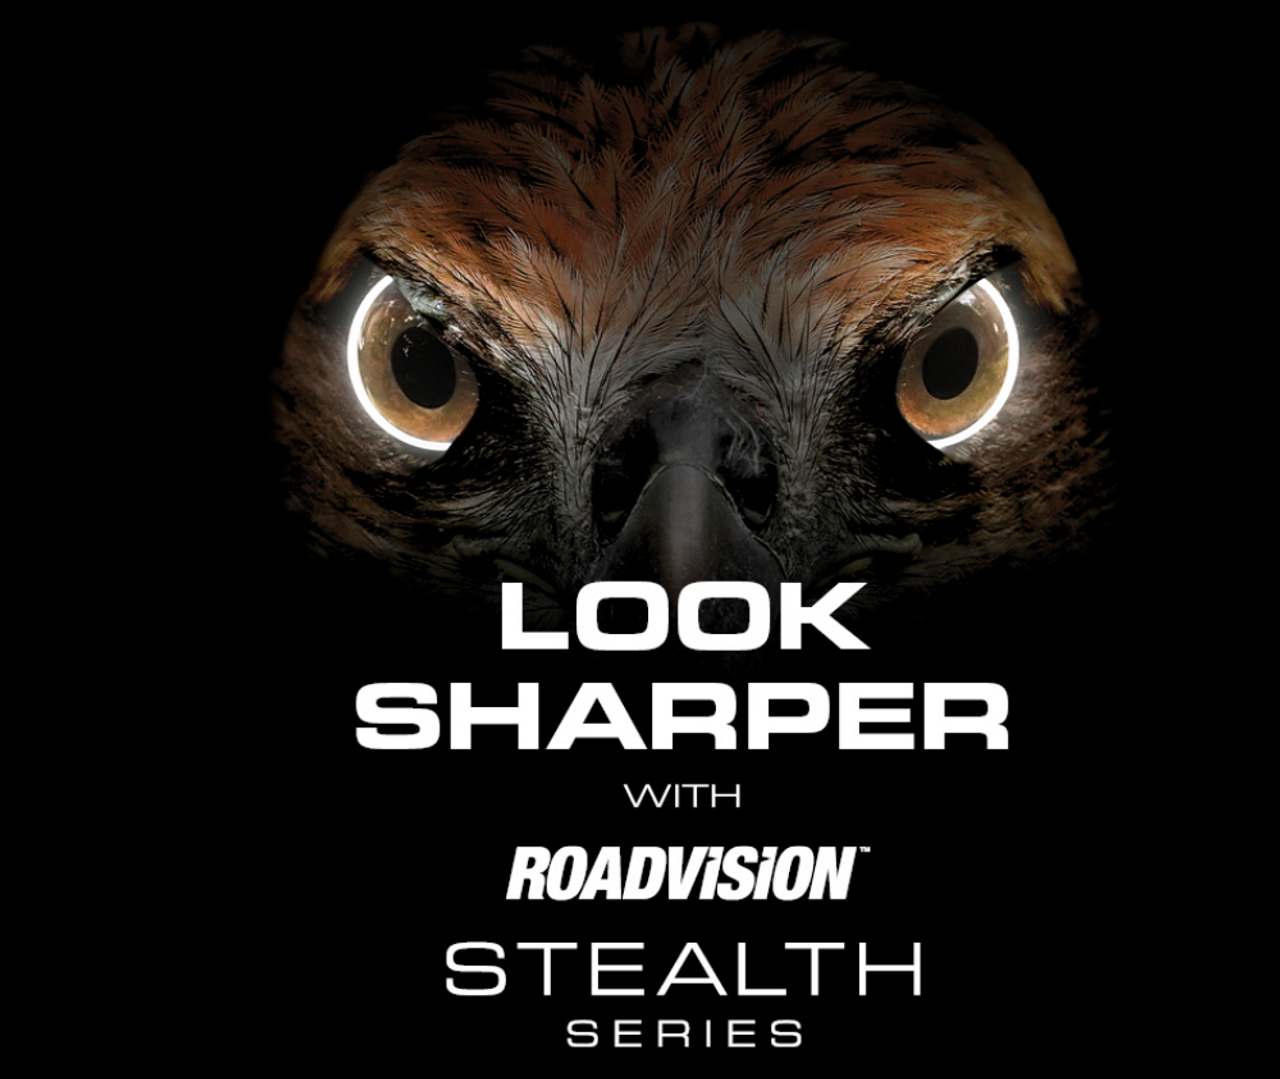 Look Good, Look Sharp, Look Stealth.